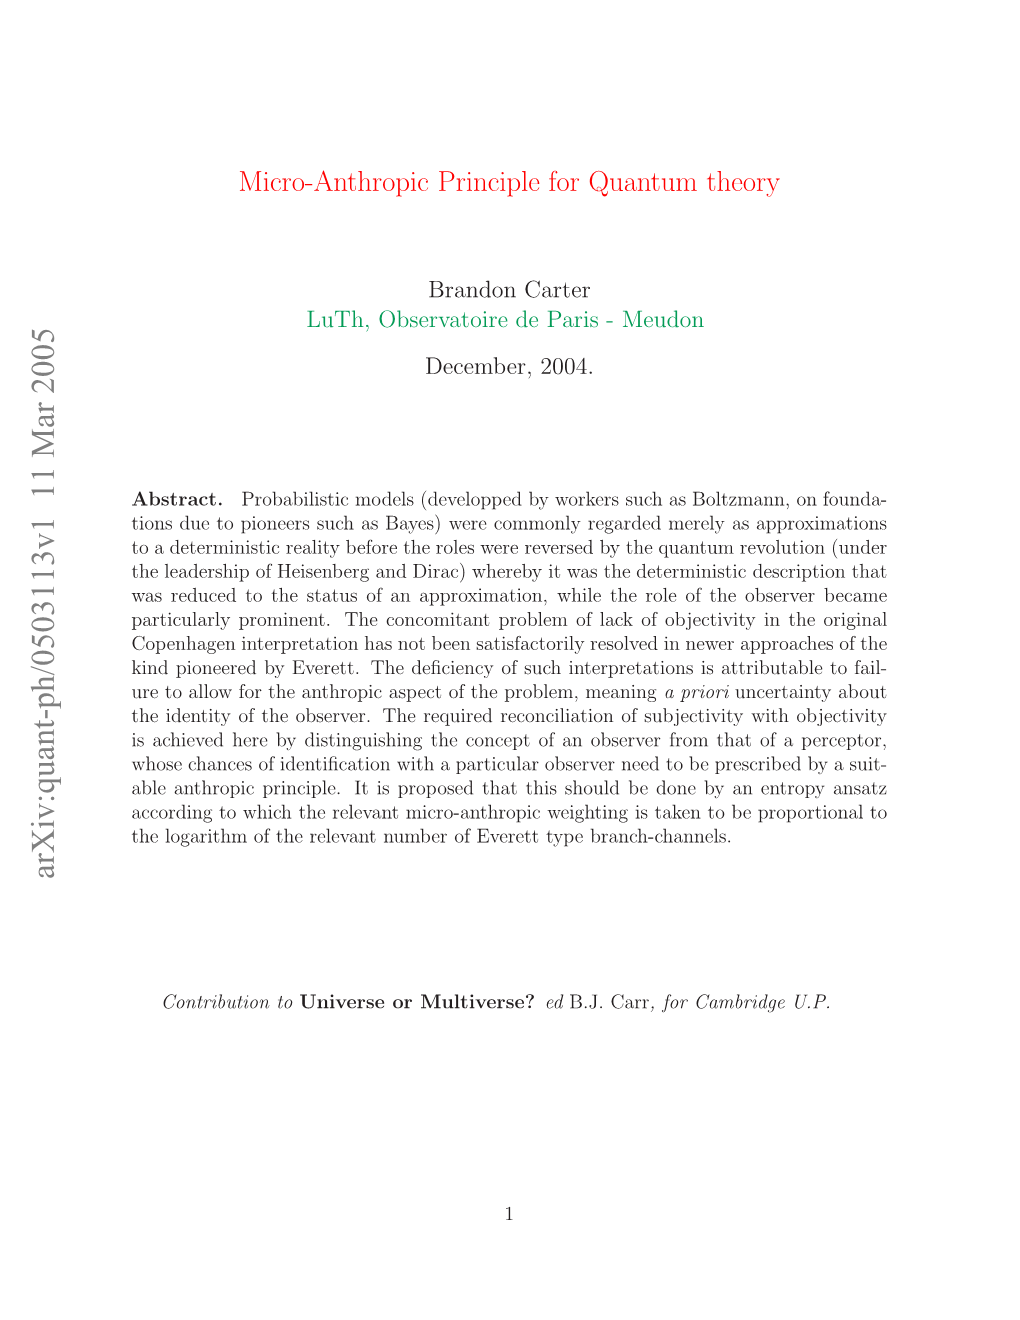 Micro-Anthropic Principle for Quantum Theory